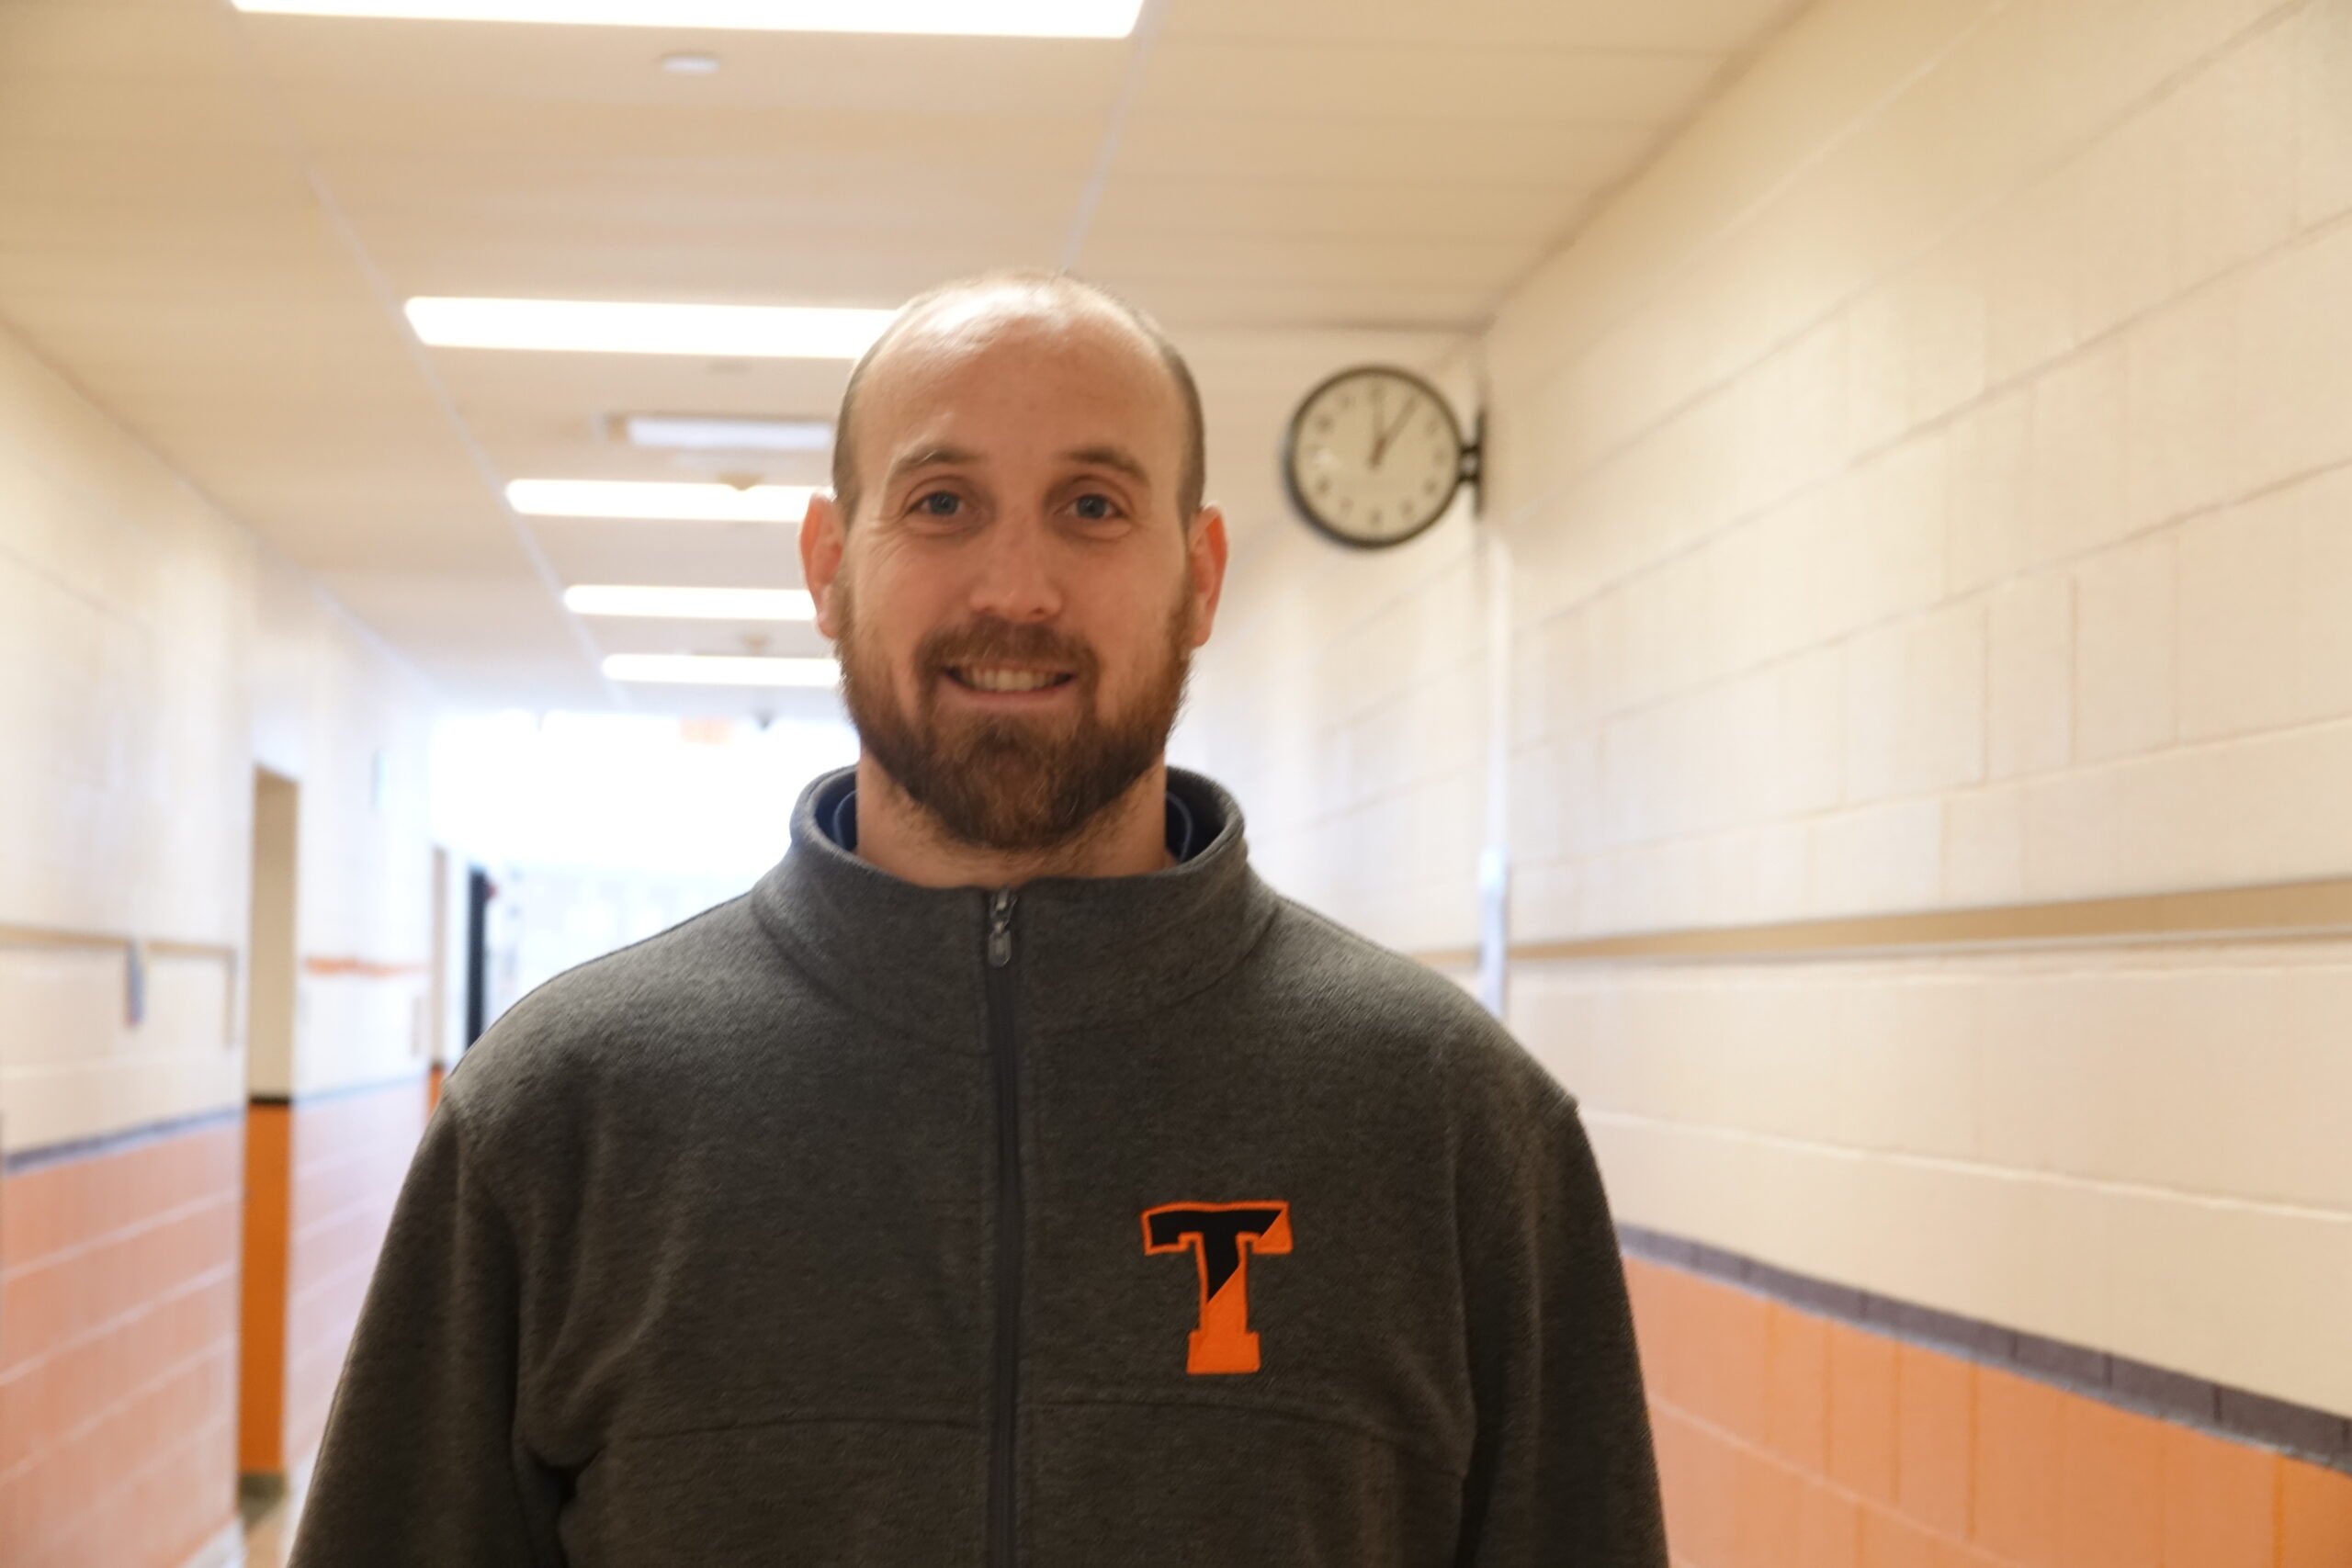 Mr.Kraft is a TAMS math teacher and local volleyball coach.